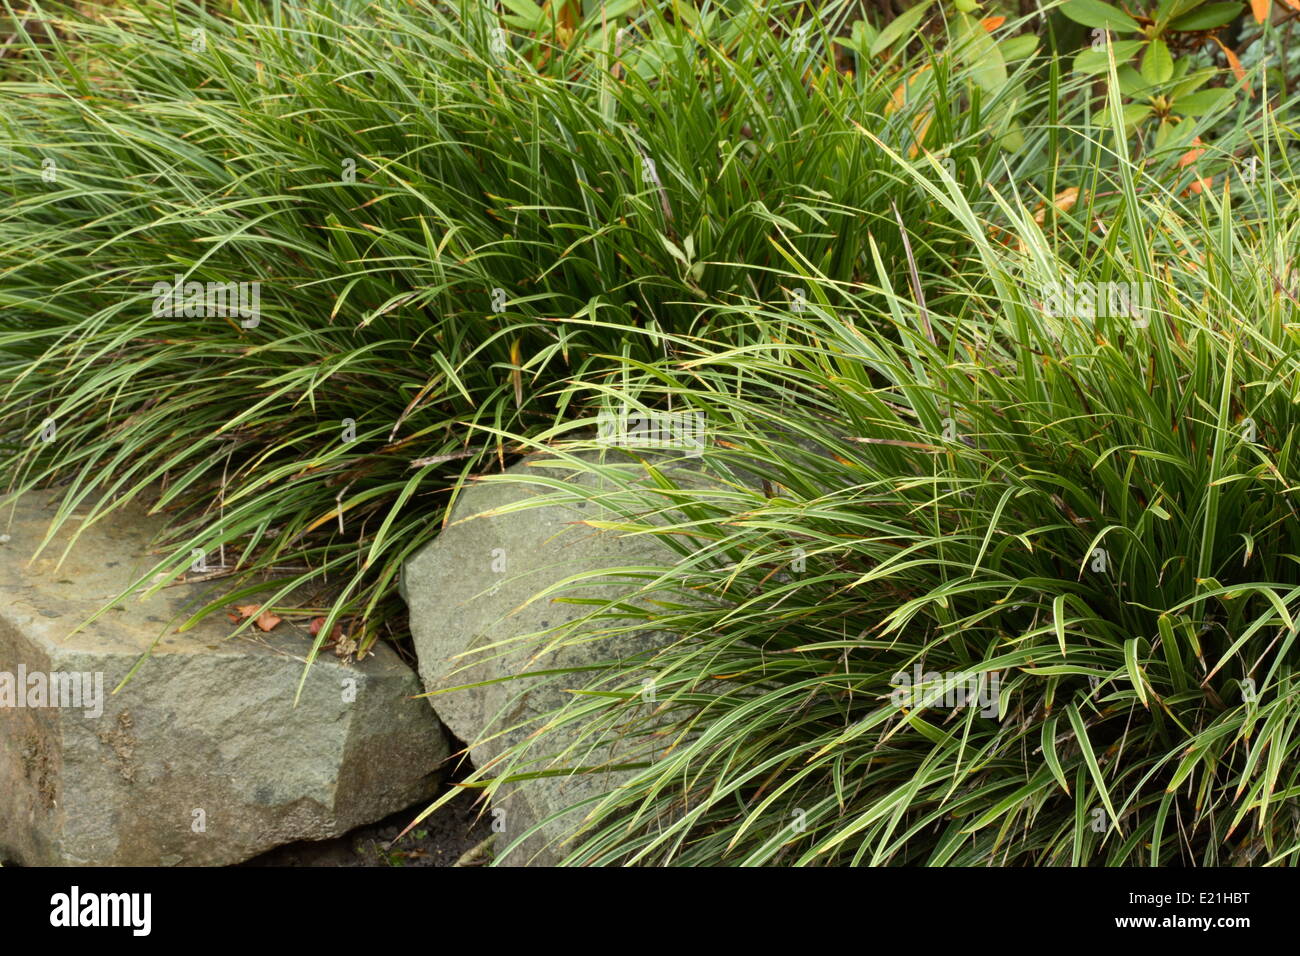 Morrow's sedge - Carex morrowii 'Variegata' Stock Photo